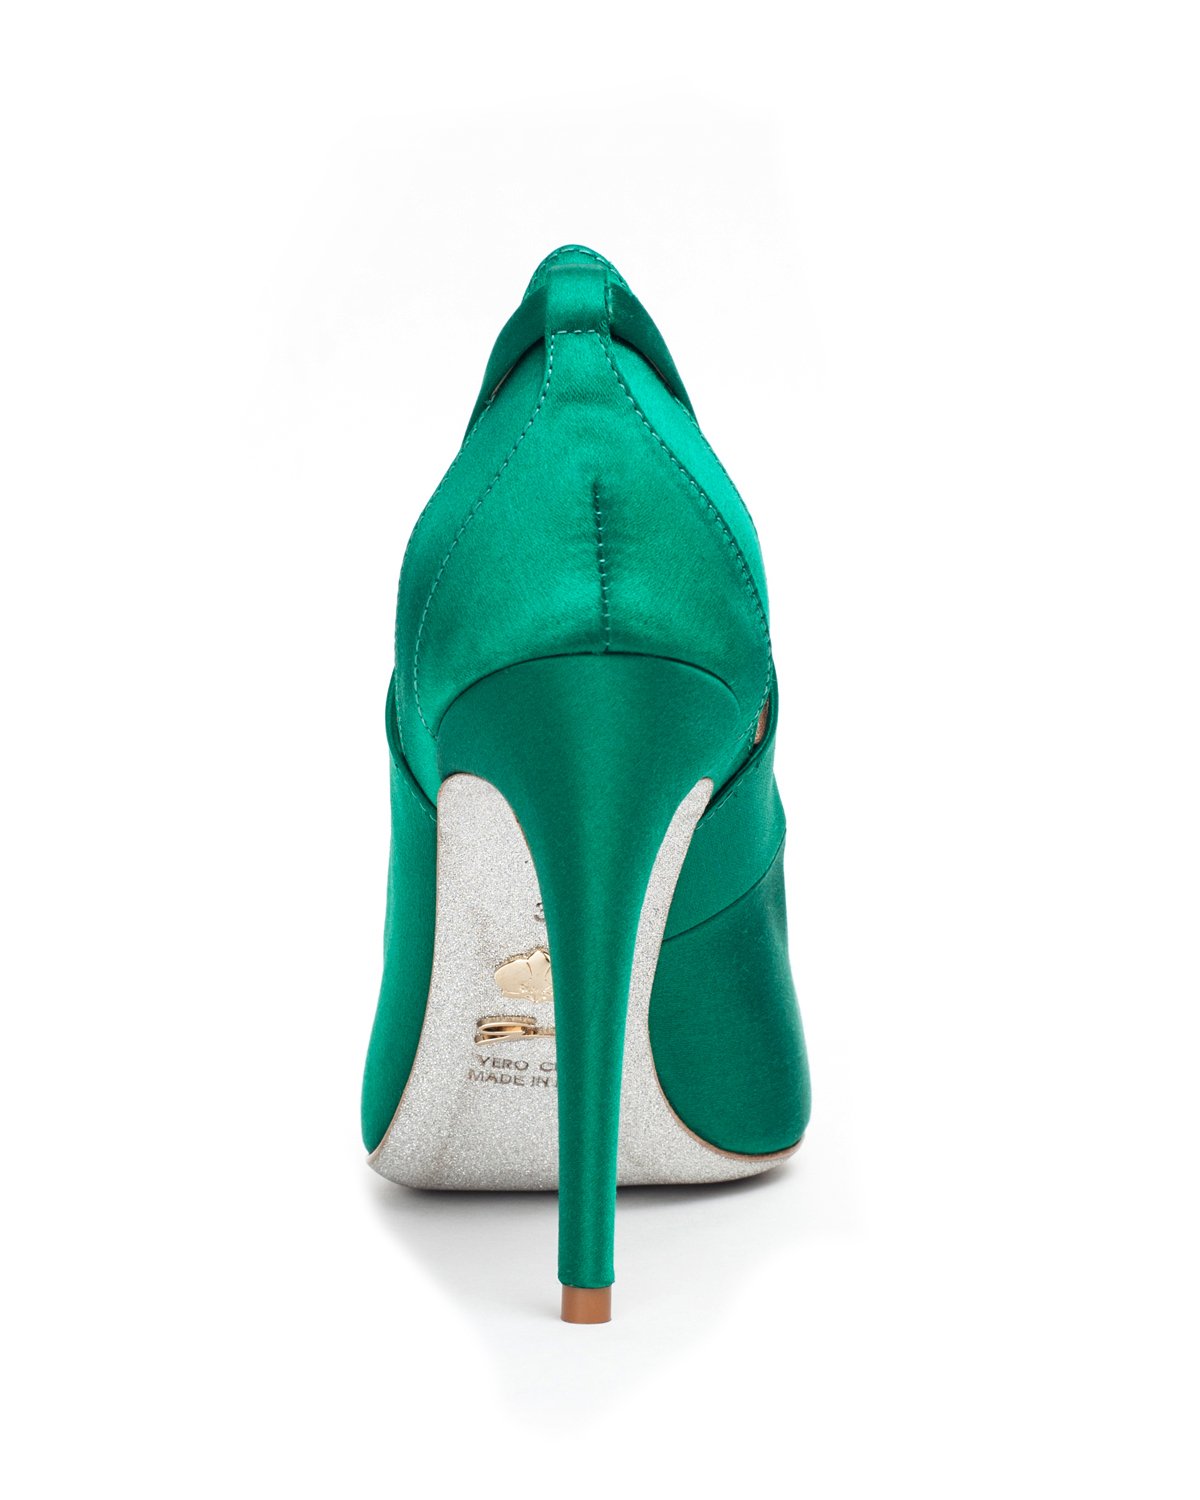 Bottle green silk pumps | The sustainable wardrobe | Genny